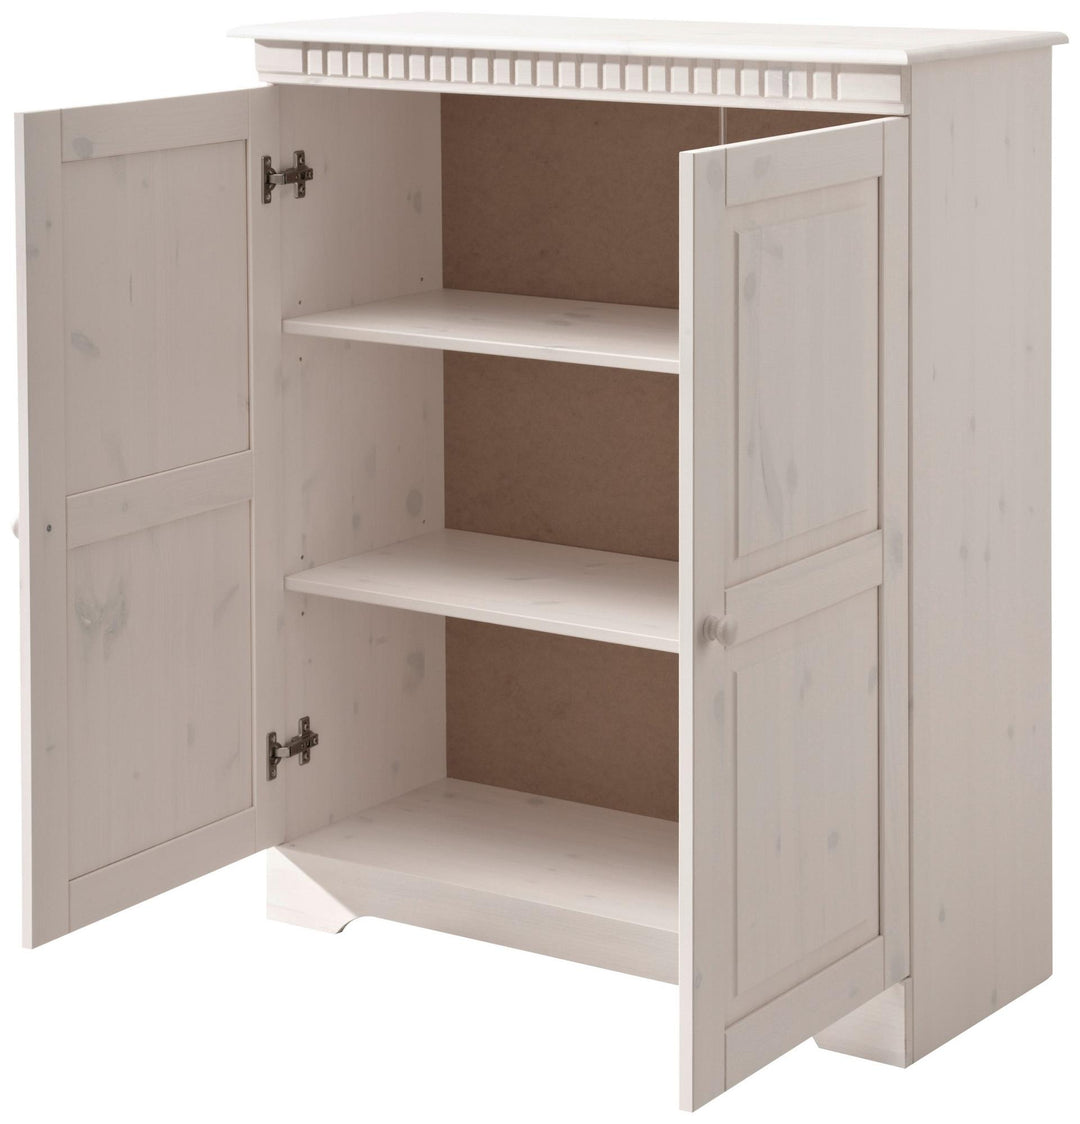 Cubrix solid wood closed storage unit - White